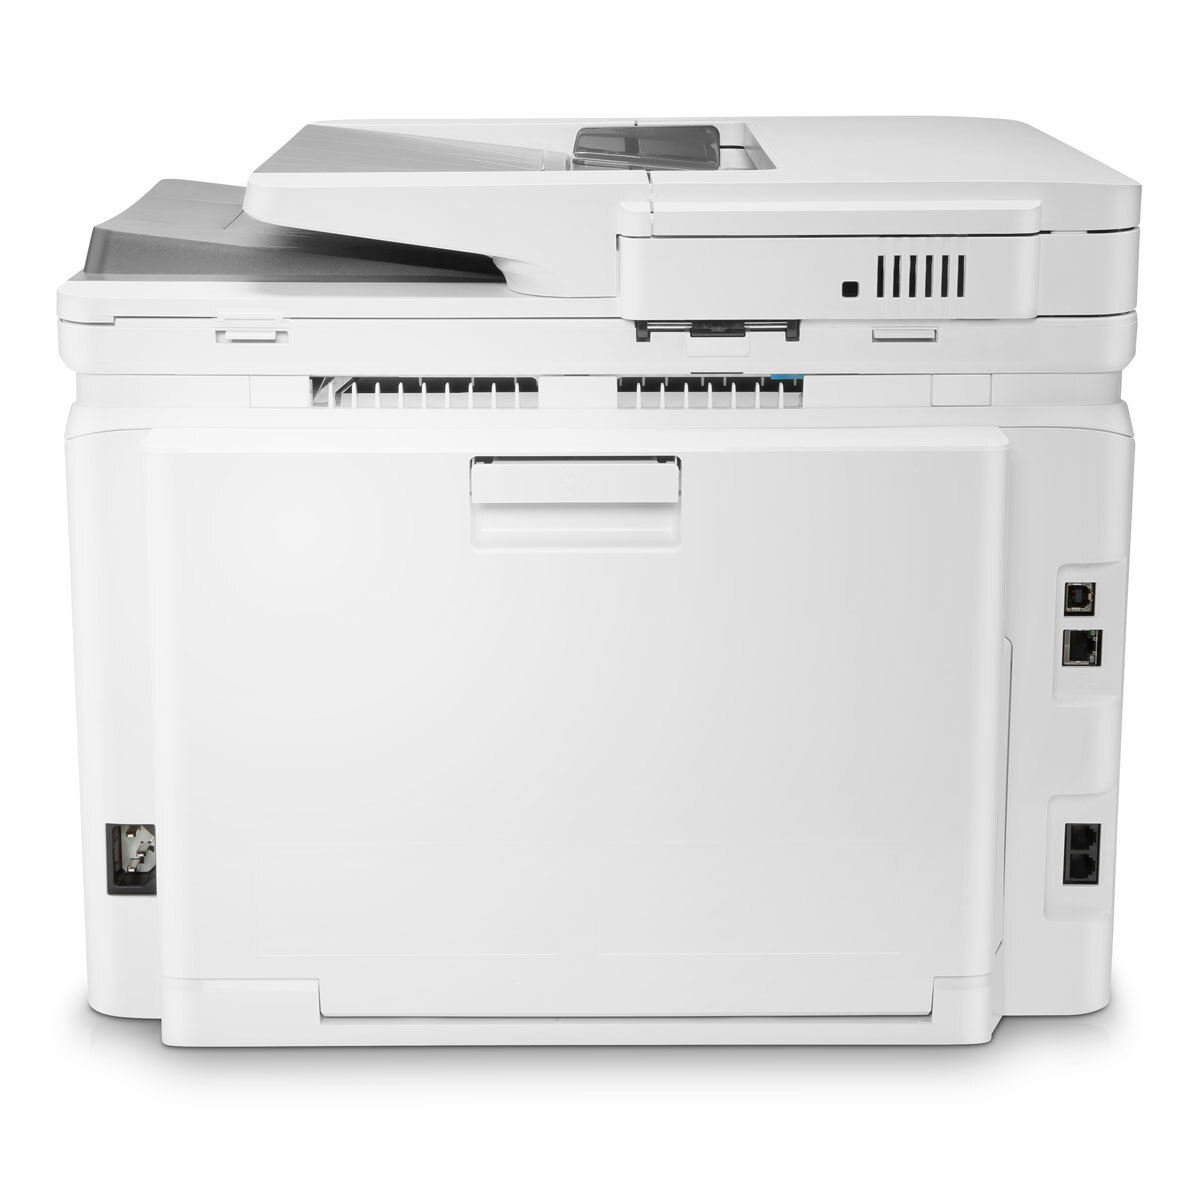 Buy HP LaserJet Pro M283FDW All in One Wireless Printer at costco.co.uk